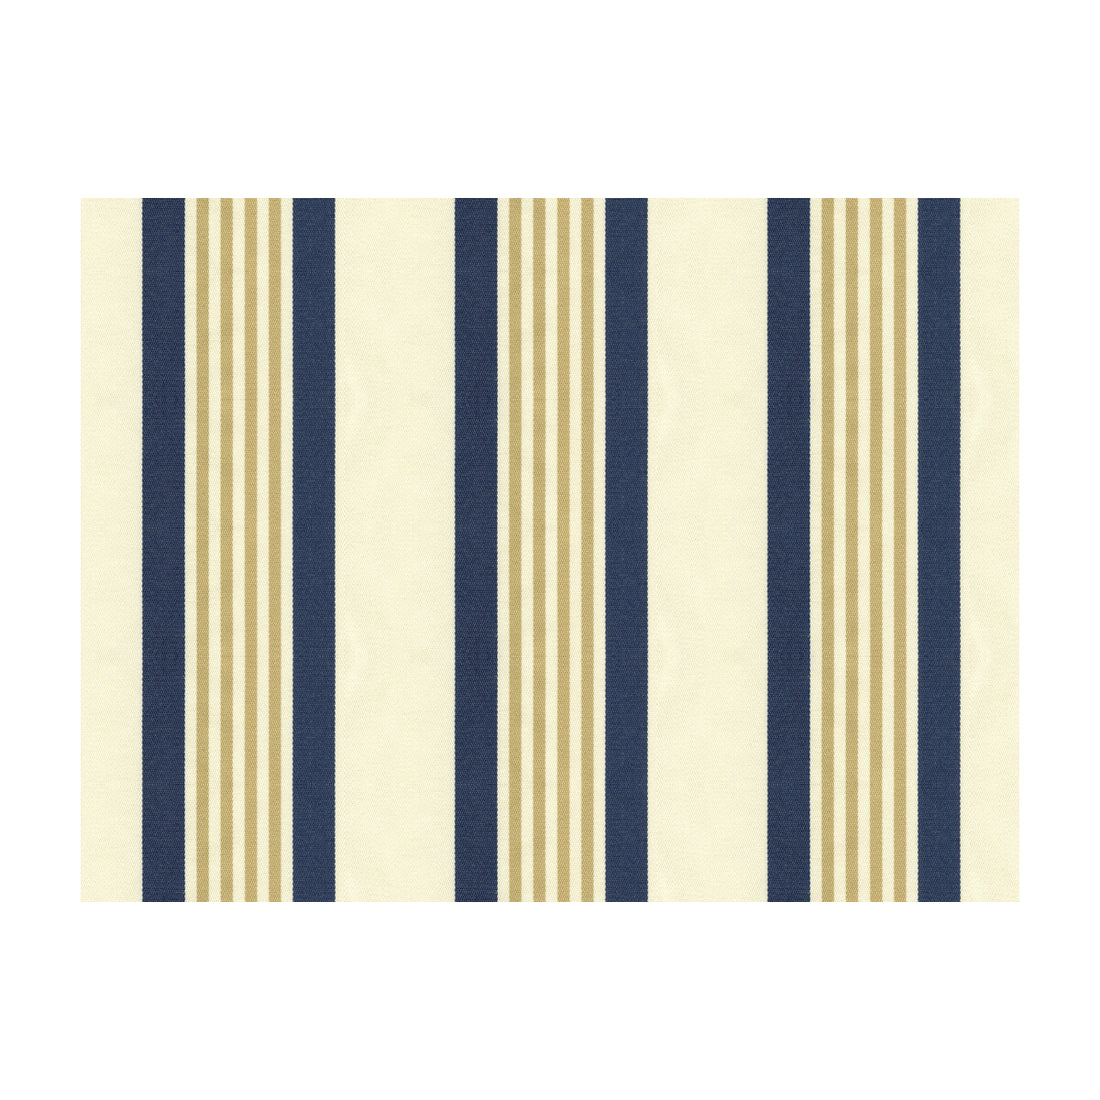 Kravet Smart fabric in 33356-516 color - pattern 33356.516.0 - by Kravet Smart in the Soleil collection